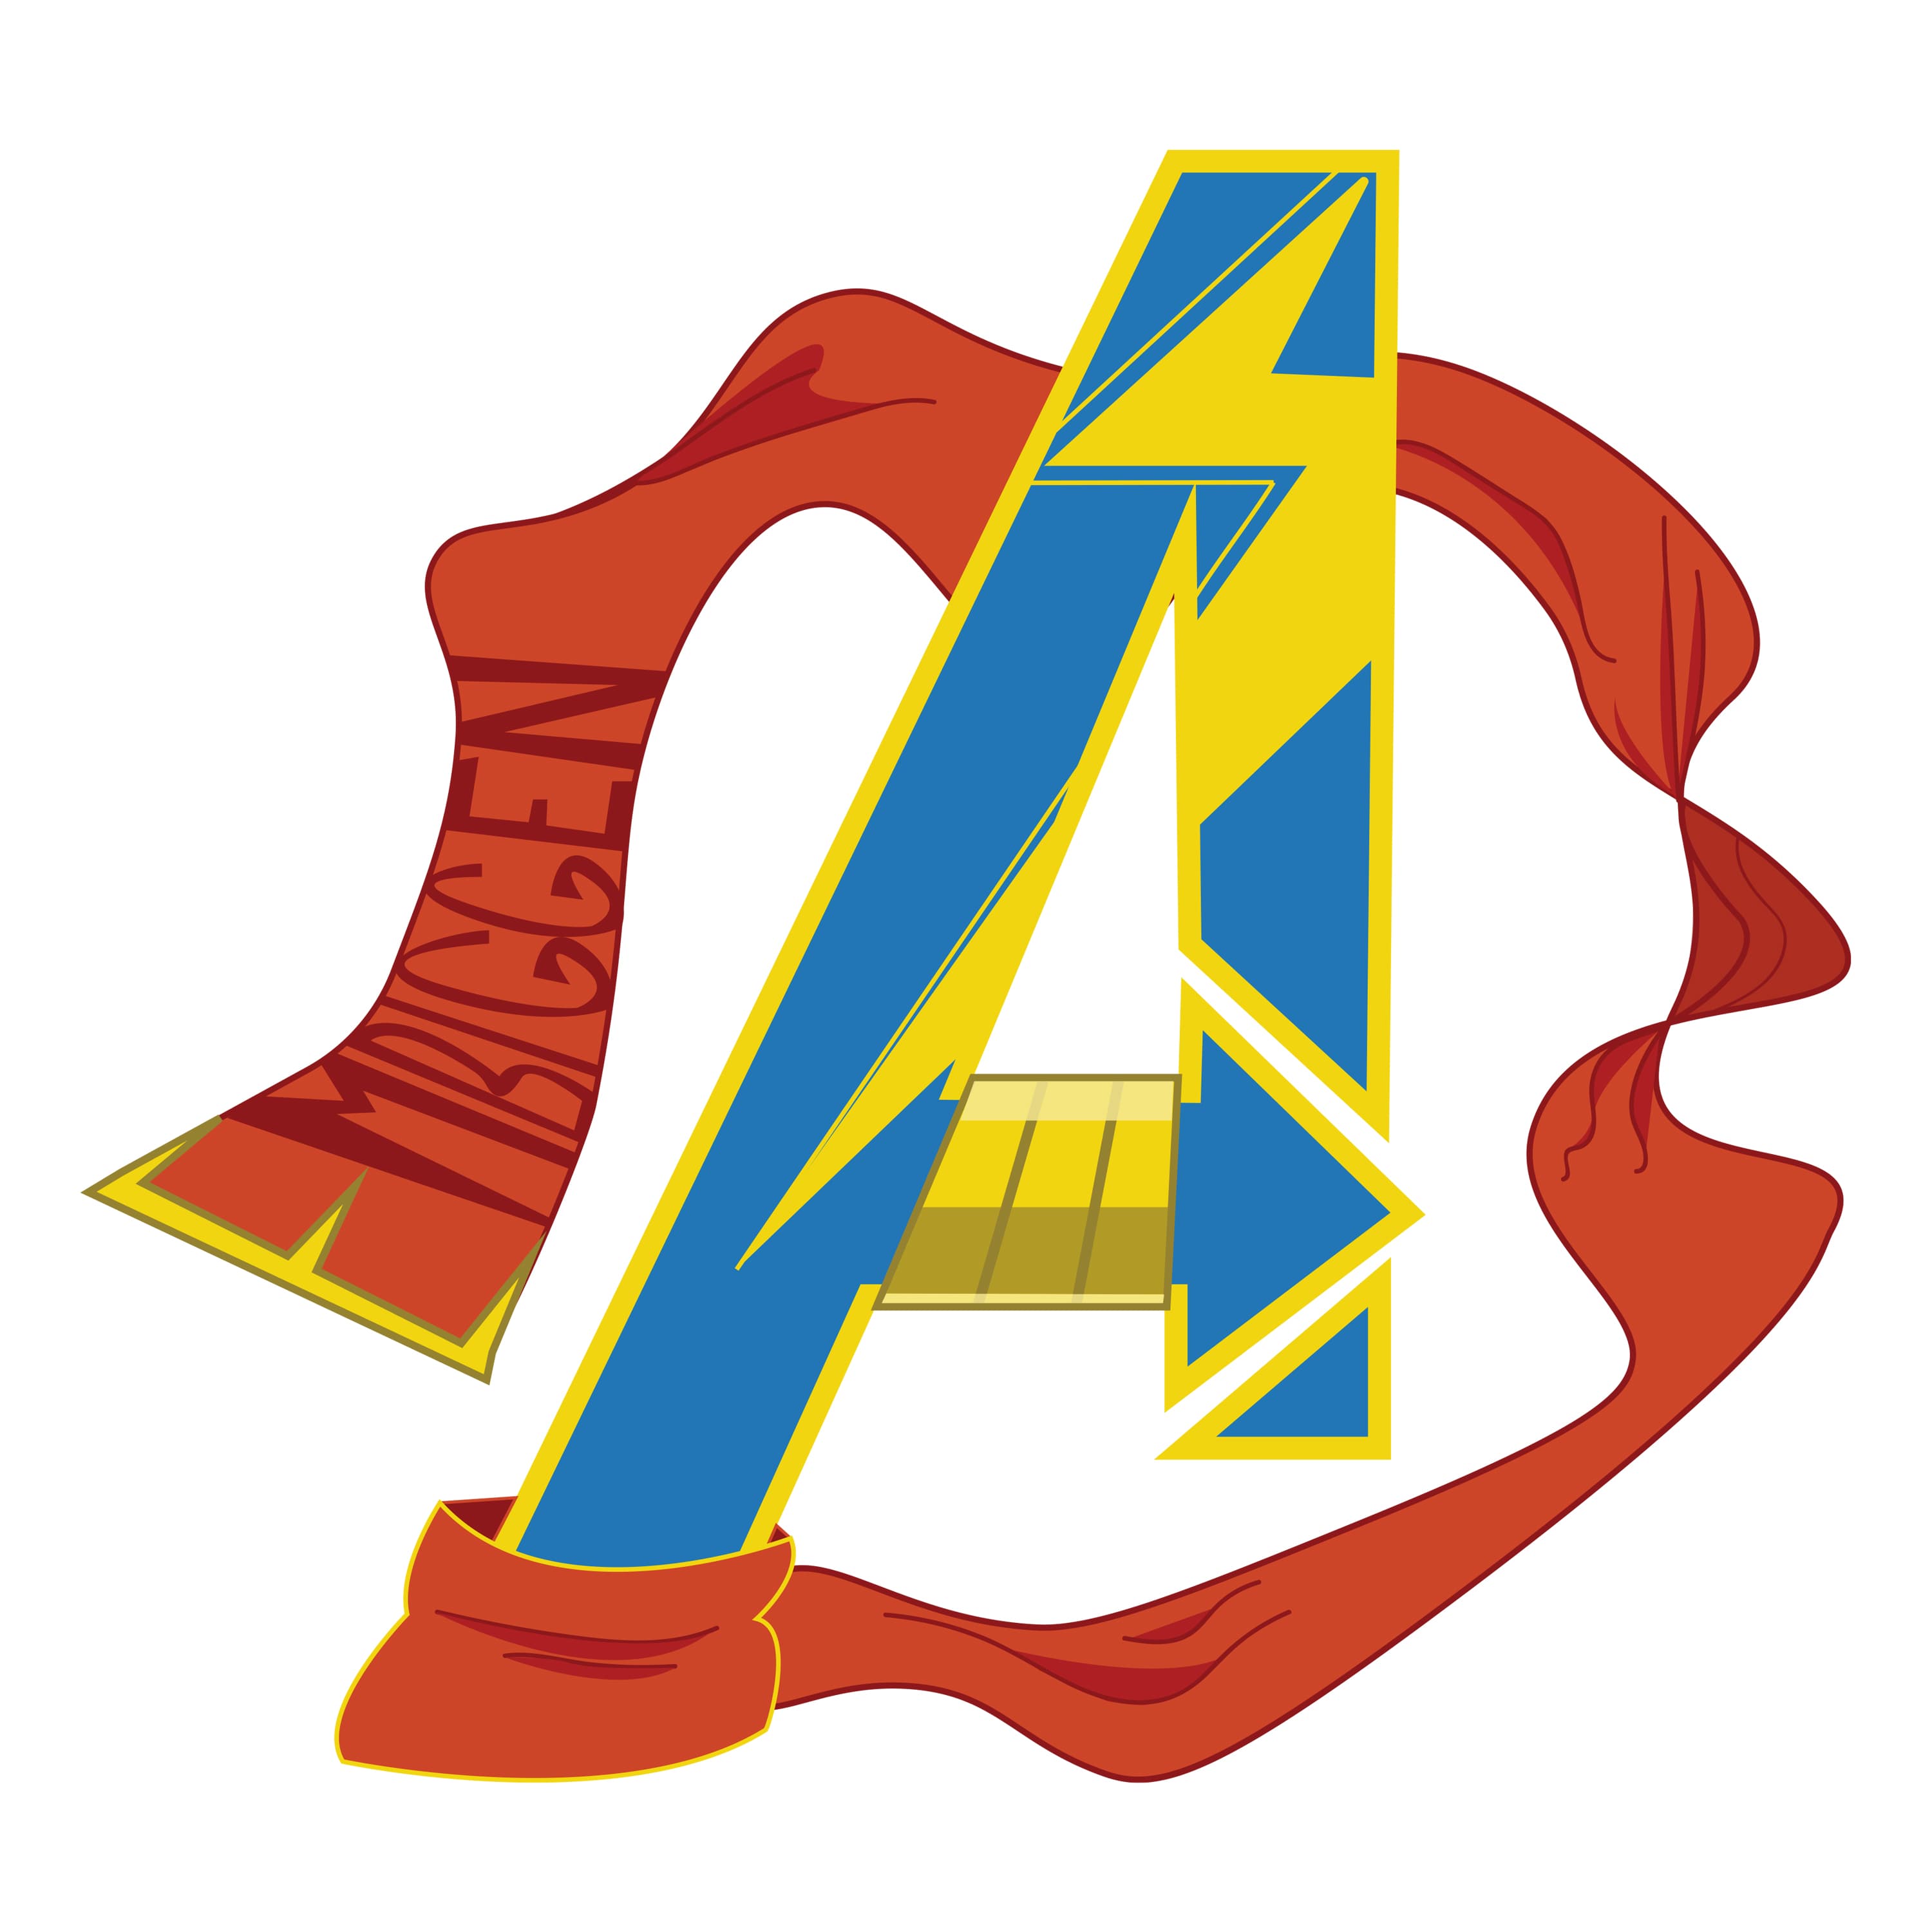 Avengers logo design by Solomon Swerling